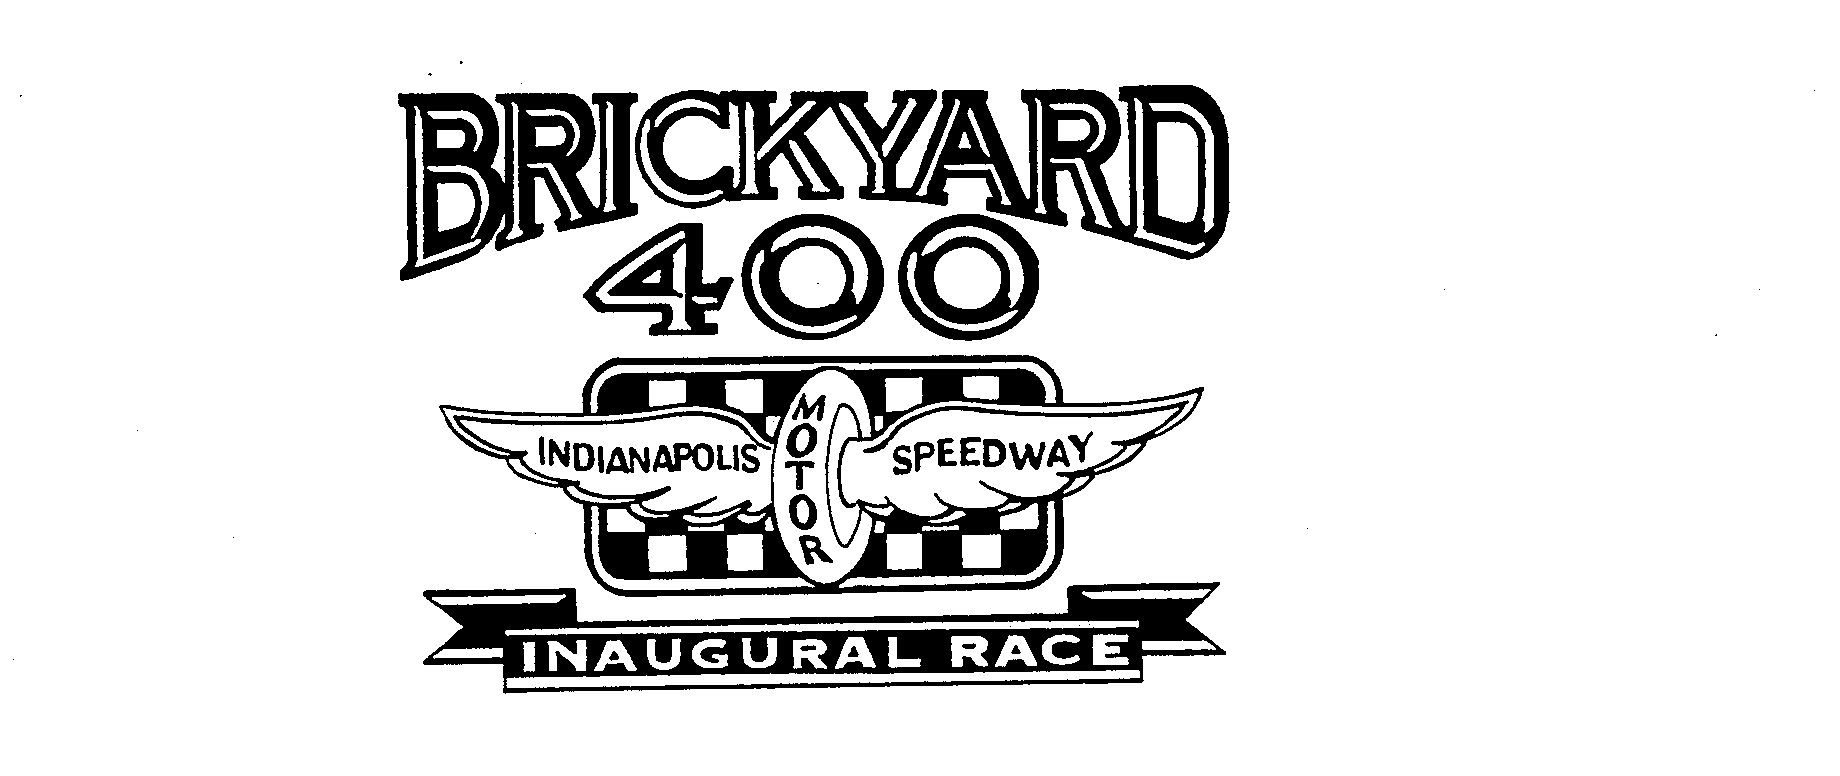  BRICKYARD 400 INDIANAPOLIS MOTOR SPEEDWAY INAUGURAL RACE